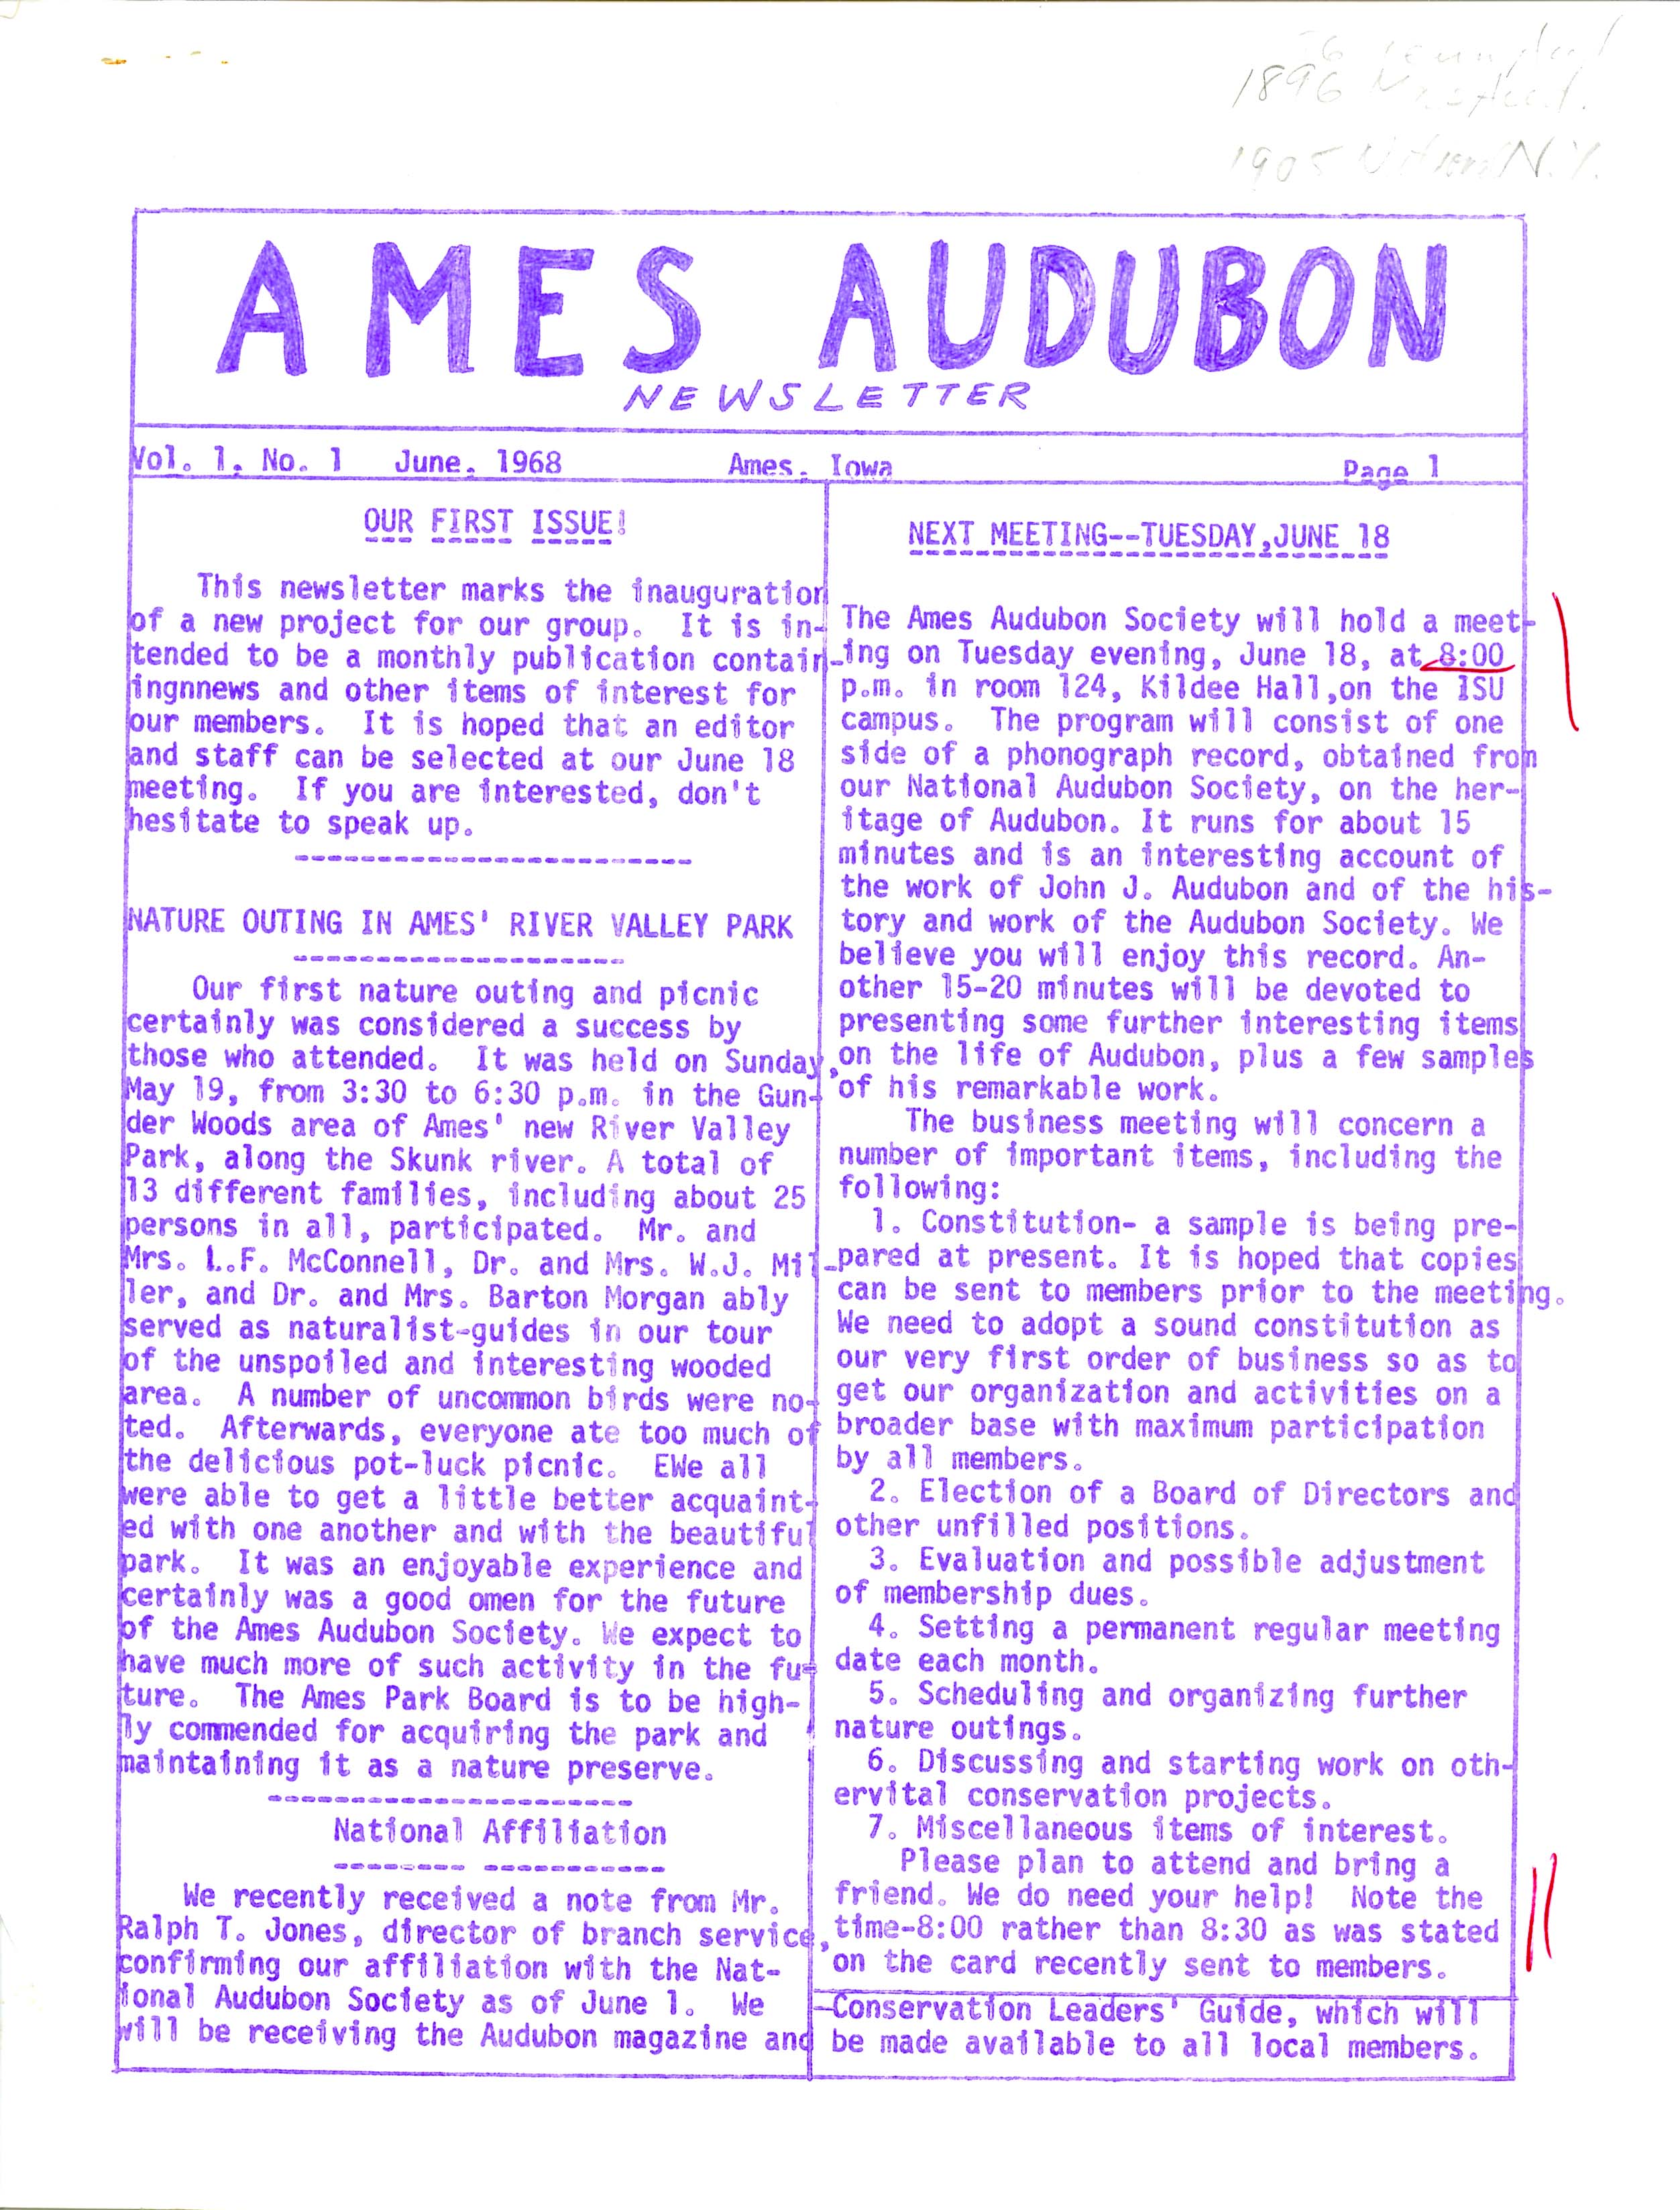 Ames Audubon Newsletter, Volume 1, Number 1, June 1968